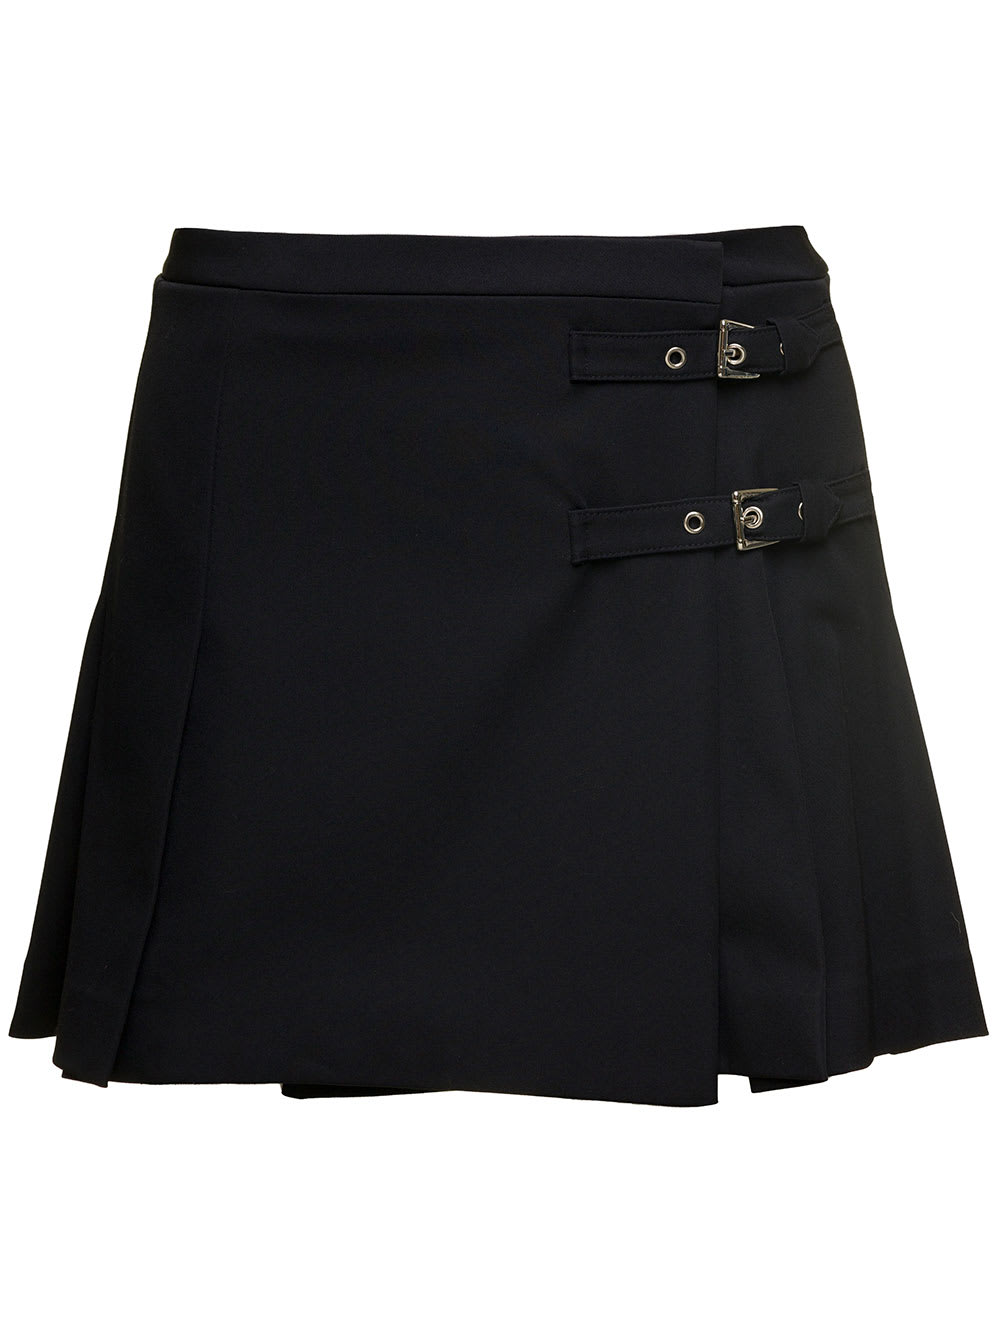 Black Mini Skirt With Side Bukle Detail With Loop In Wool Blend Woman